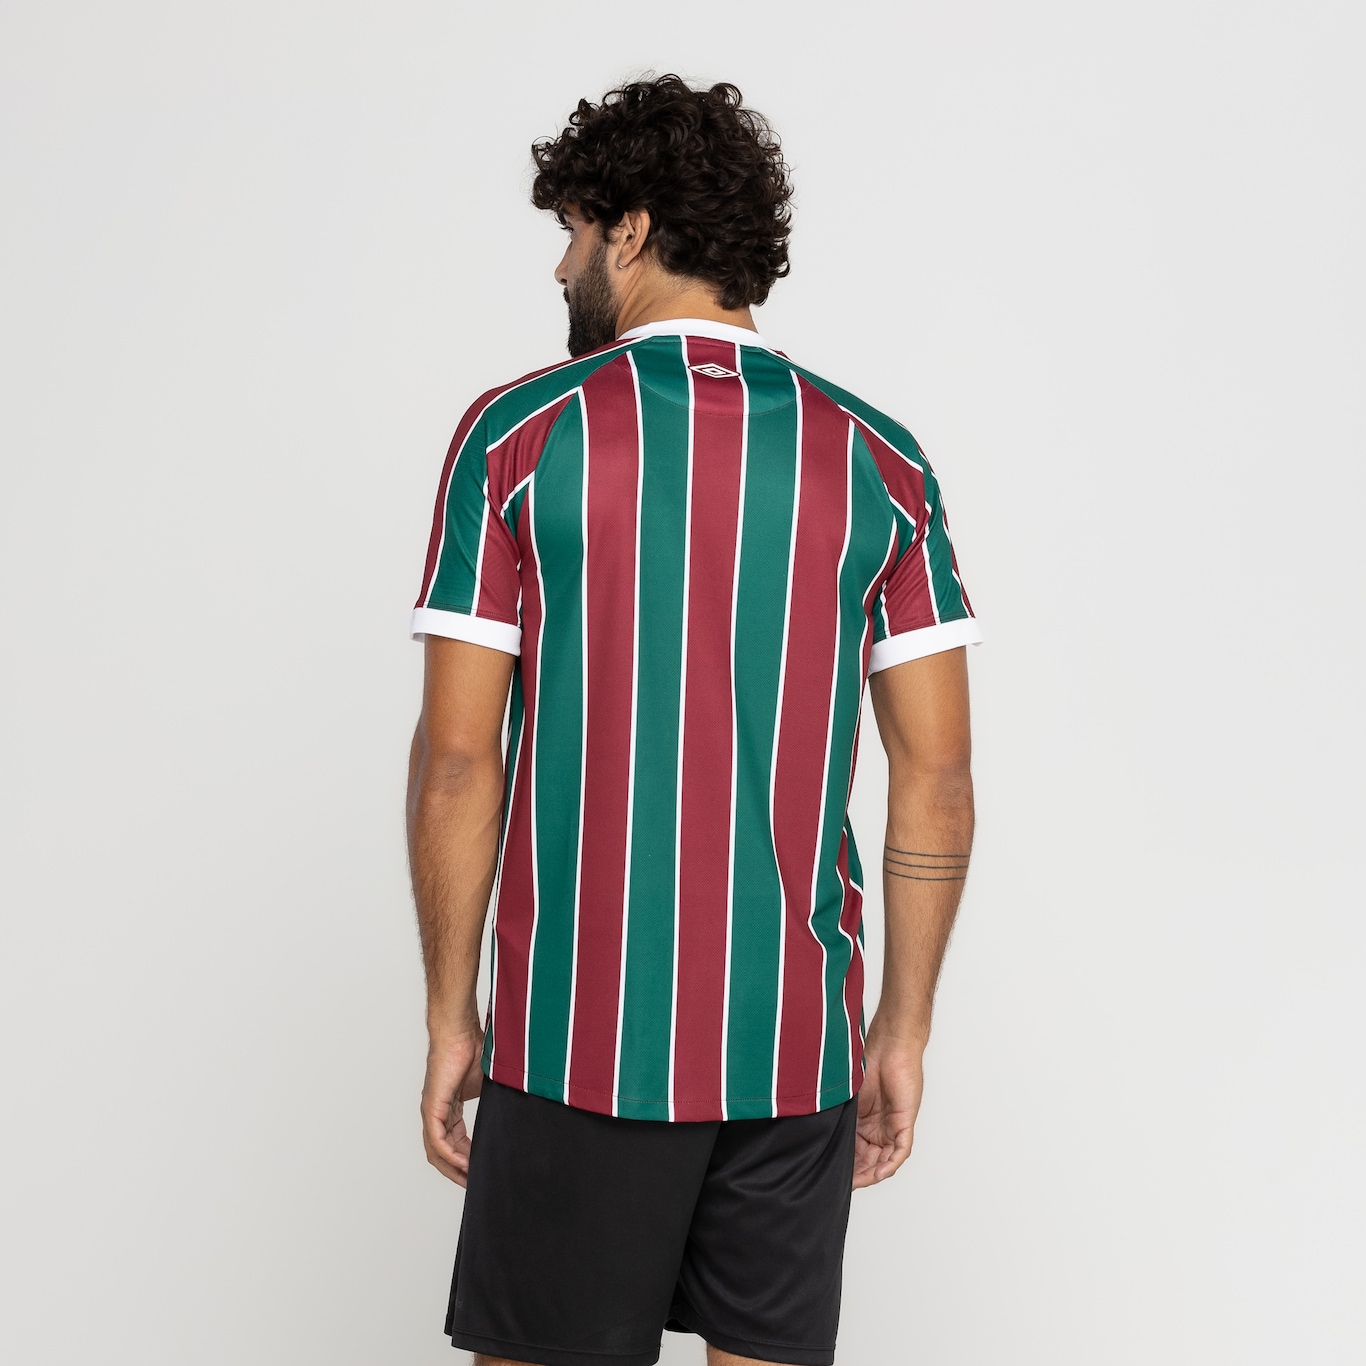 Camisa do Fluminense I 23 Masculina Umbro  - Foto 2